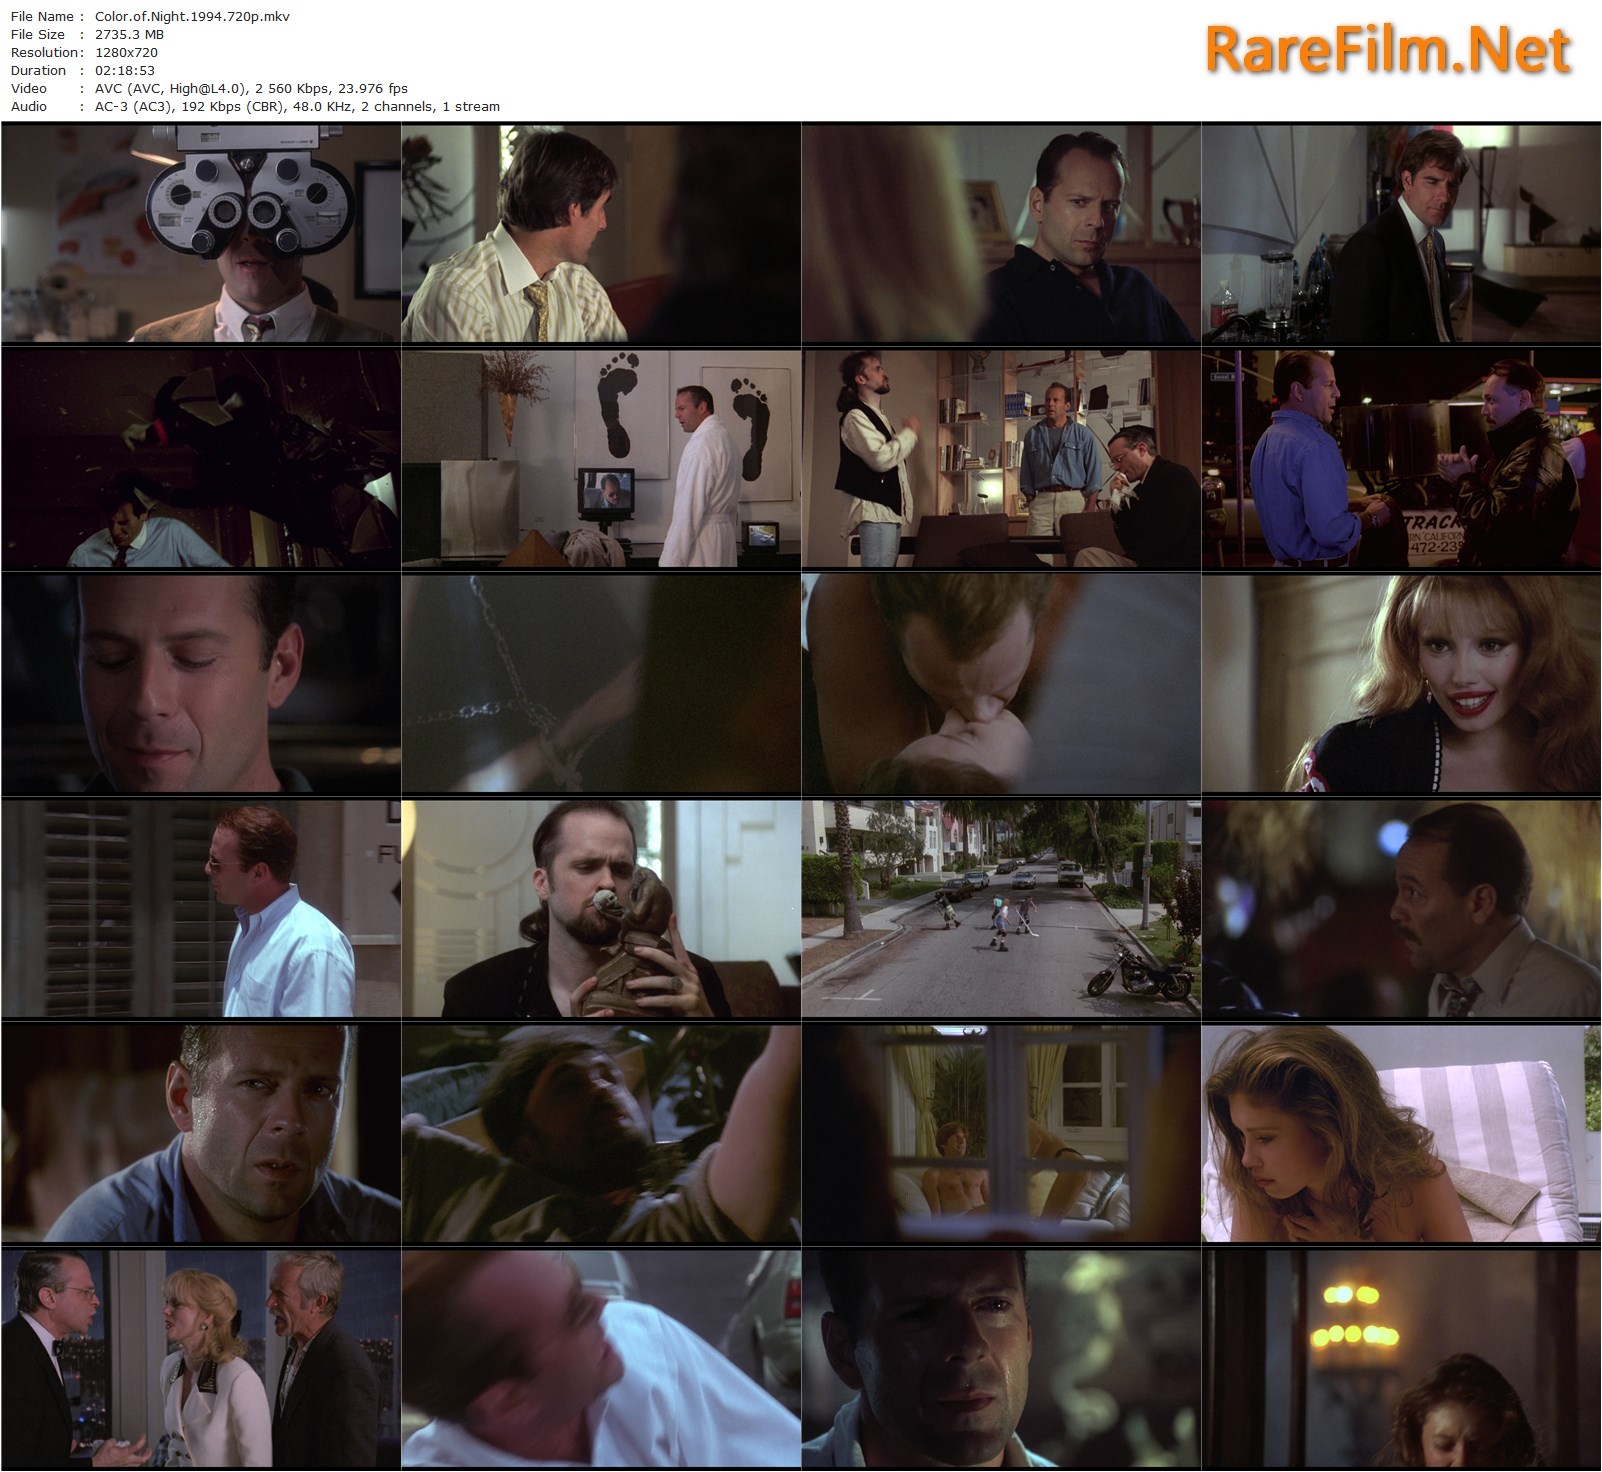 Color of Night (1994) Richard Rush, Bruce Willis, Jane March, Rubén Blades.